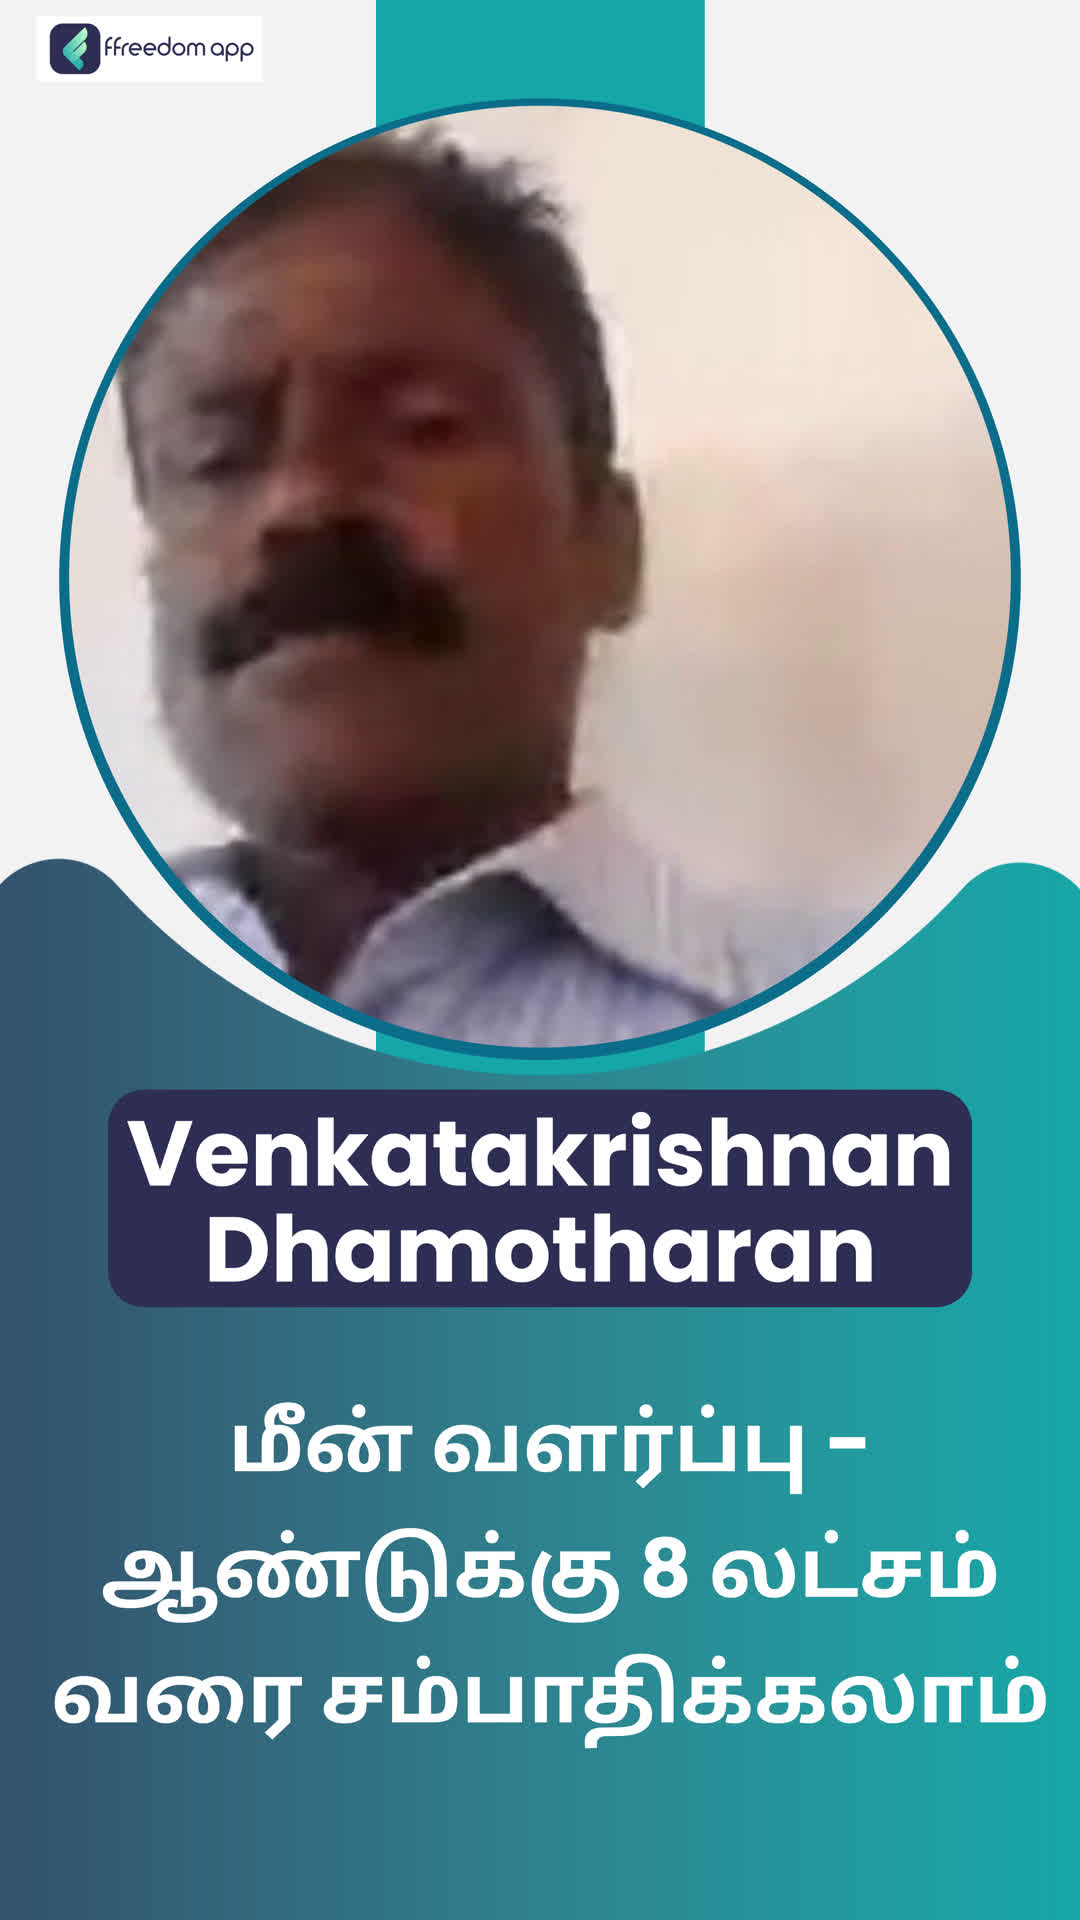 Dhamotharan V's Honest Review of ffreedom app - Thoothukudi ,Tamil Nadu